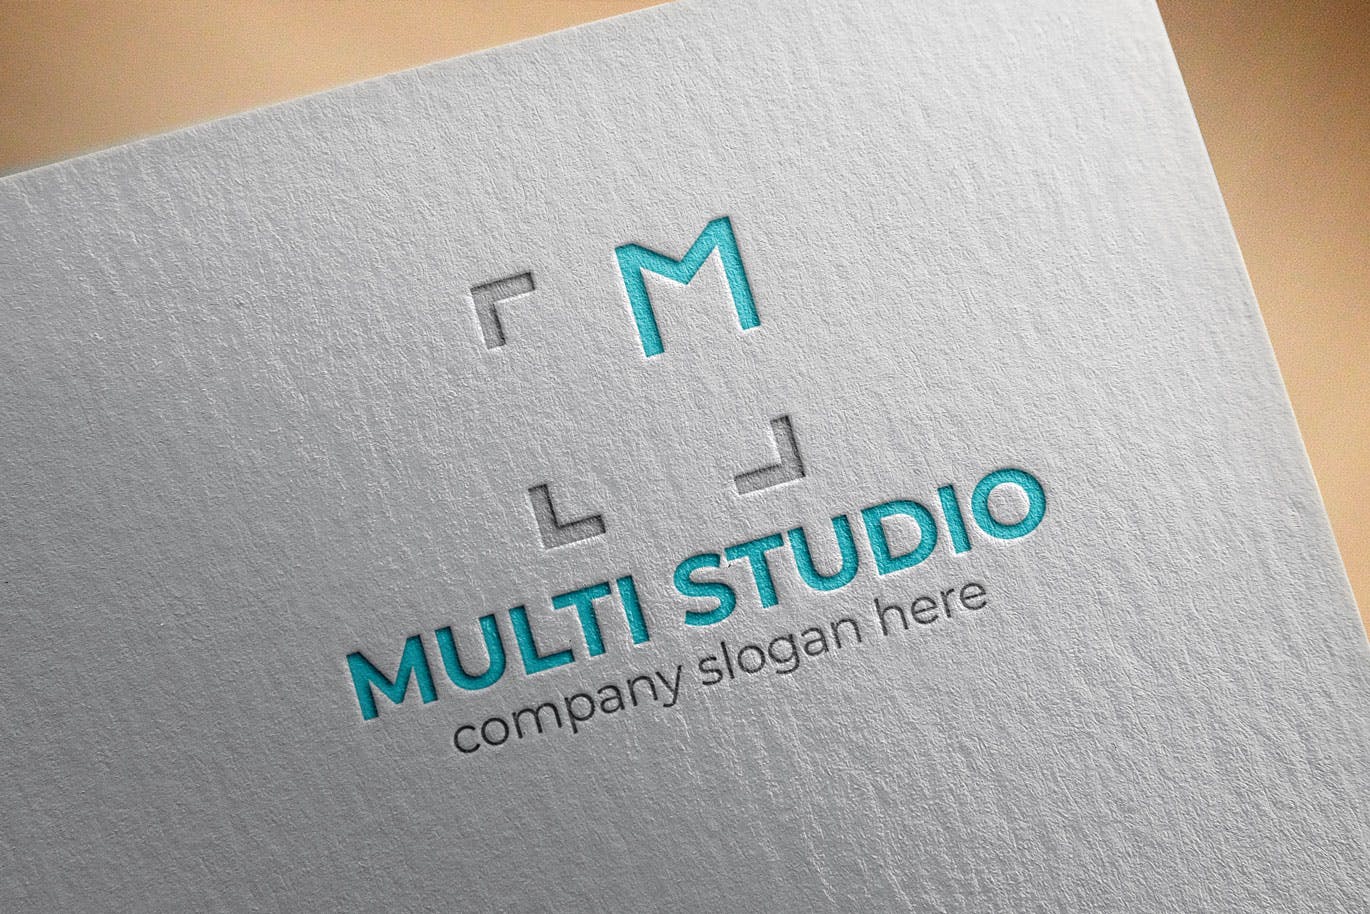 字母M创意图形企业品牌Logo设计蚂蚁素材精选模板 Letter Based Business Logo Template插图(2)